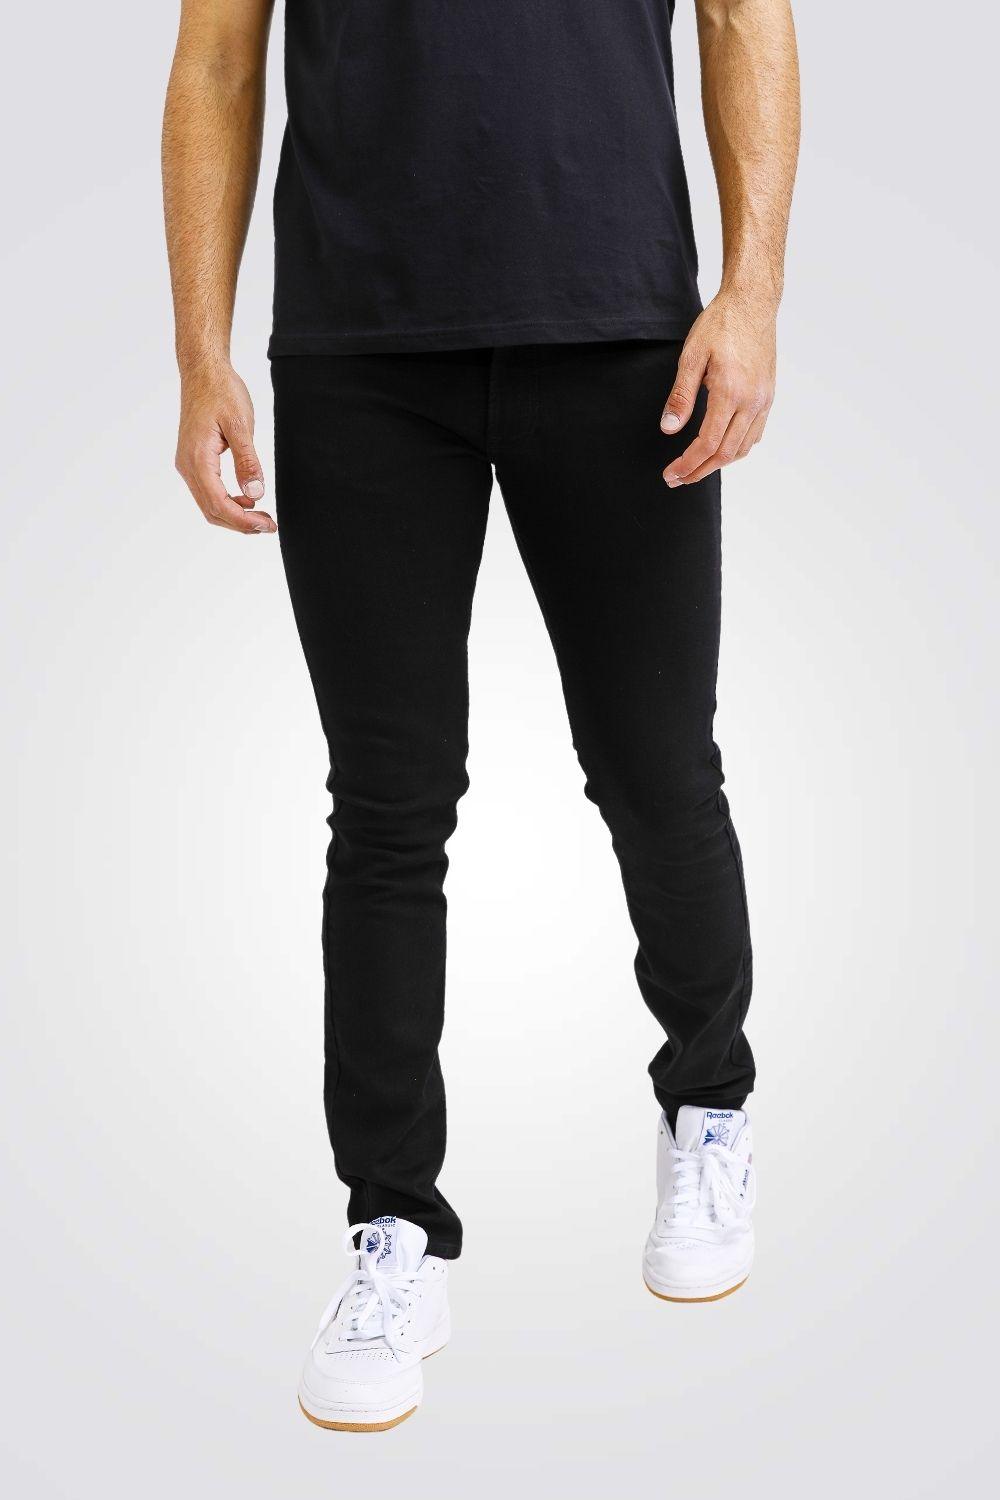 LEE - ג'ינס LUKE שחור - MASHBIR//365